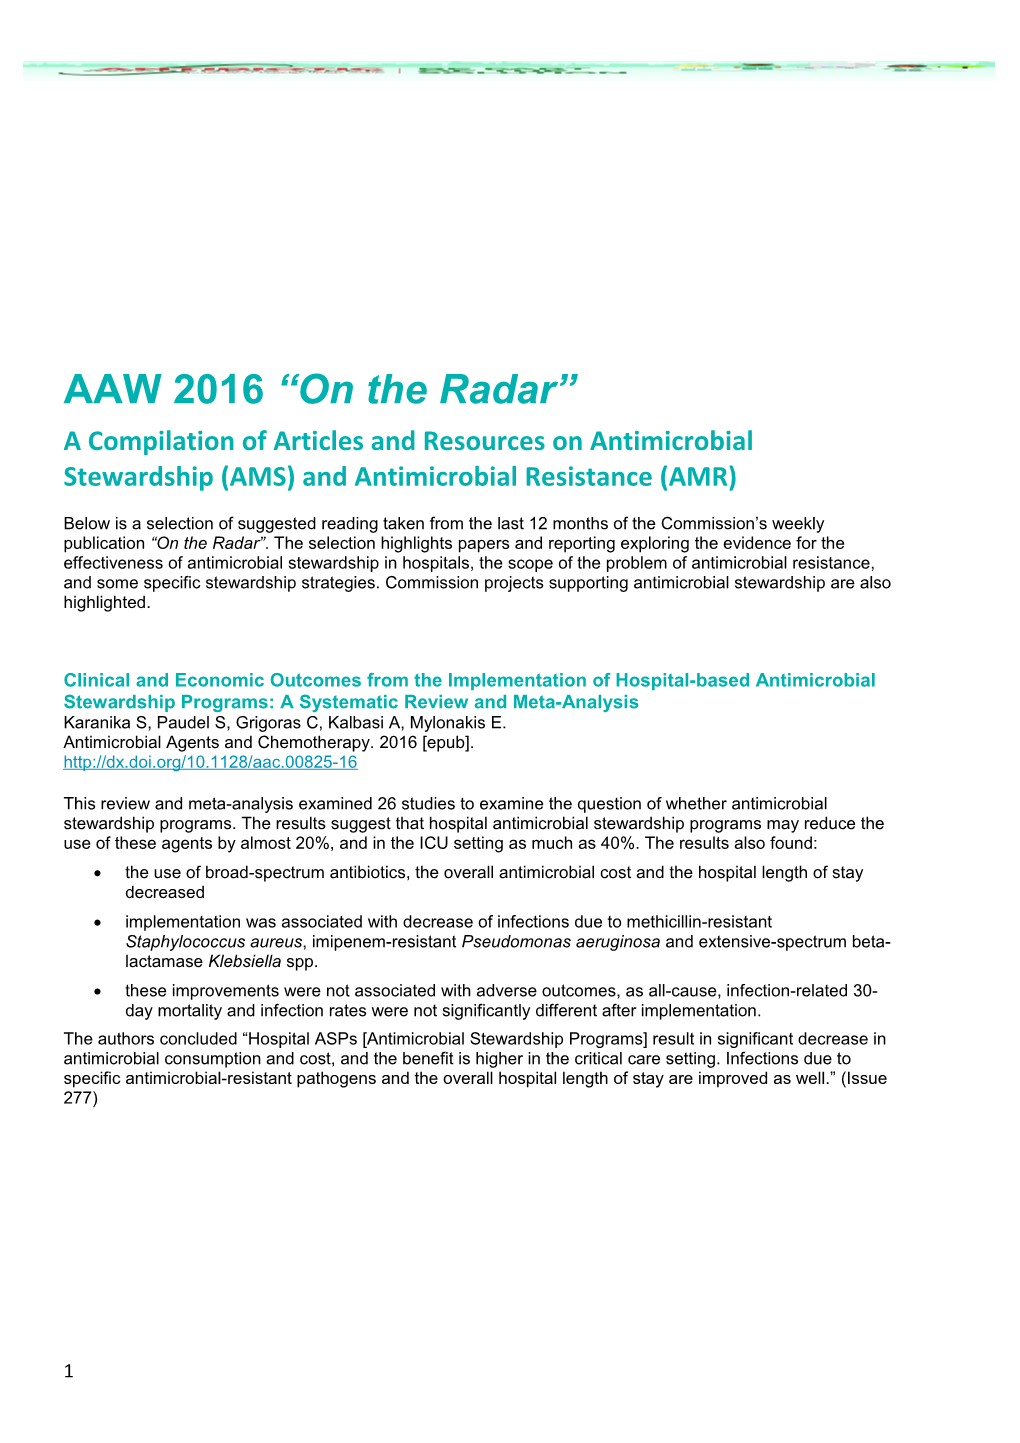 AAW 2016 on the Radar